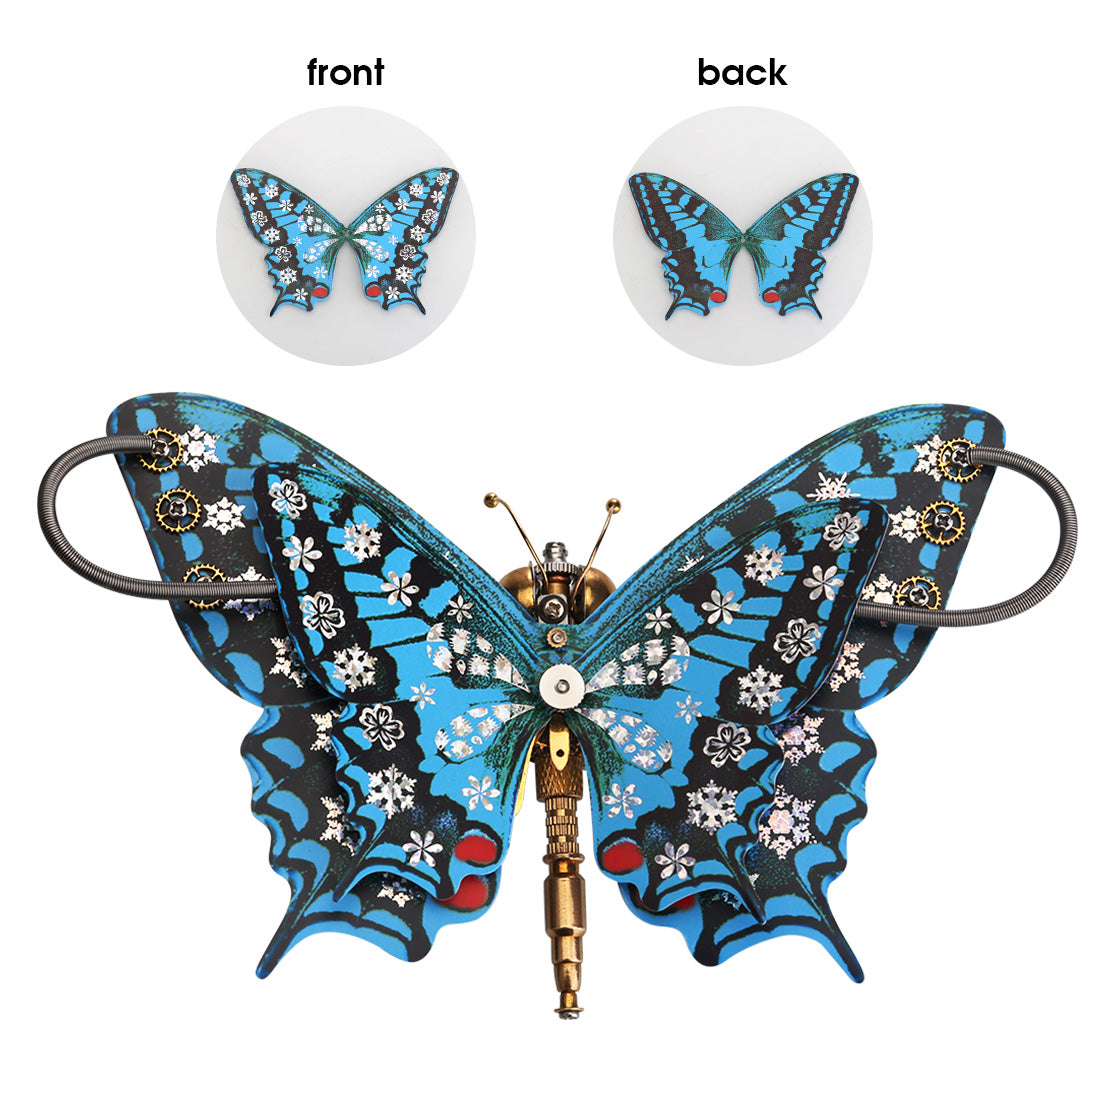 150PCS Steampunk Blue Butterfly Pipevine Swallowtail Model Building Kit